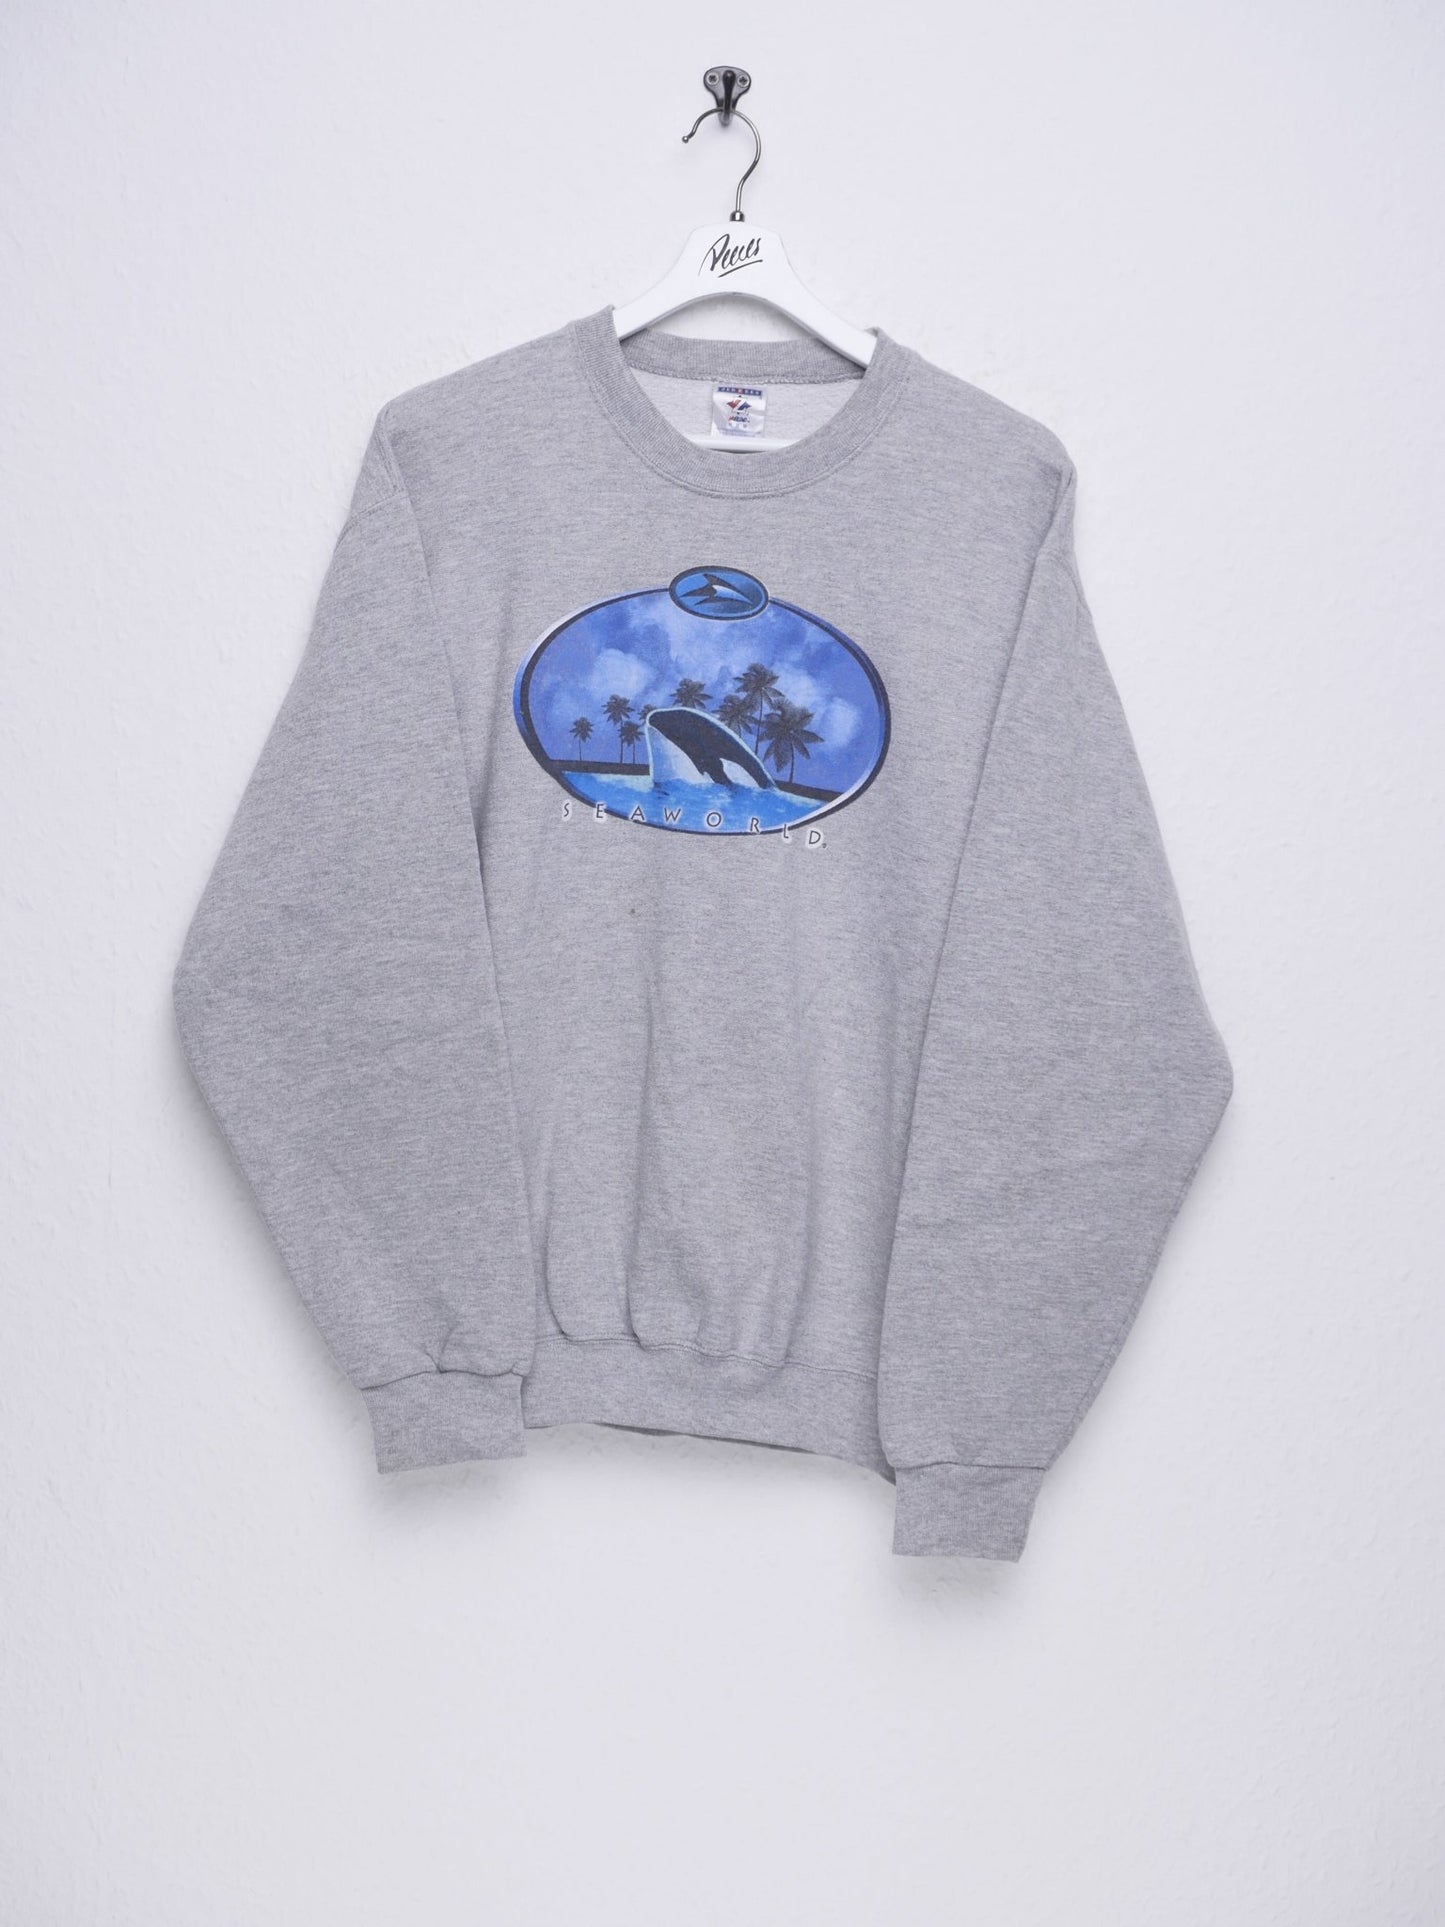 jerzees Seaworld printed Graphic grey Sweater - Peeces